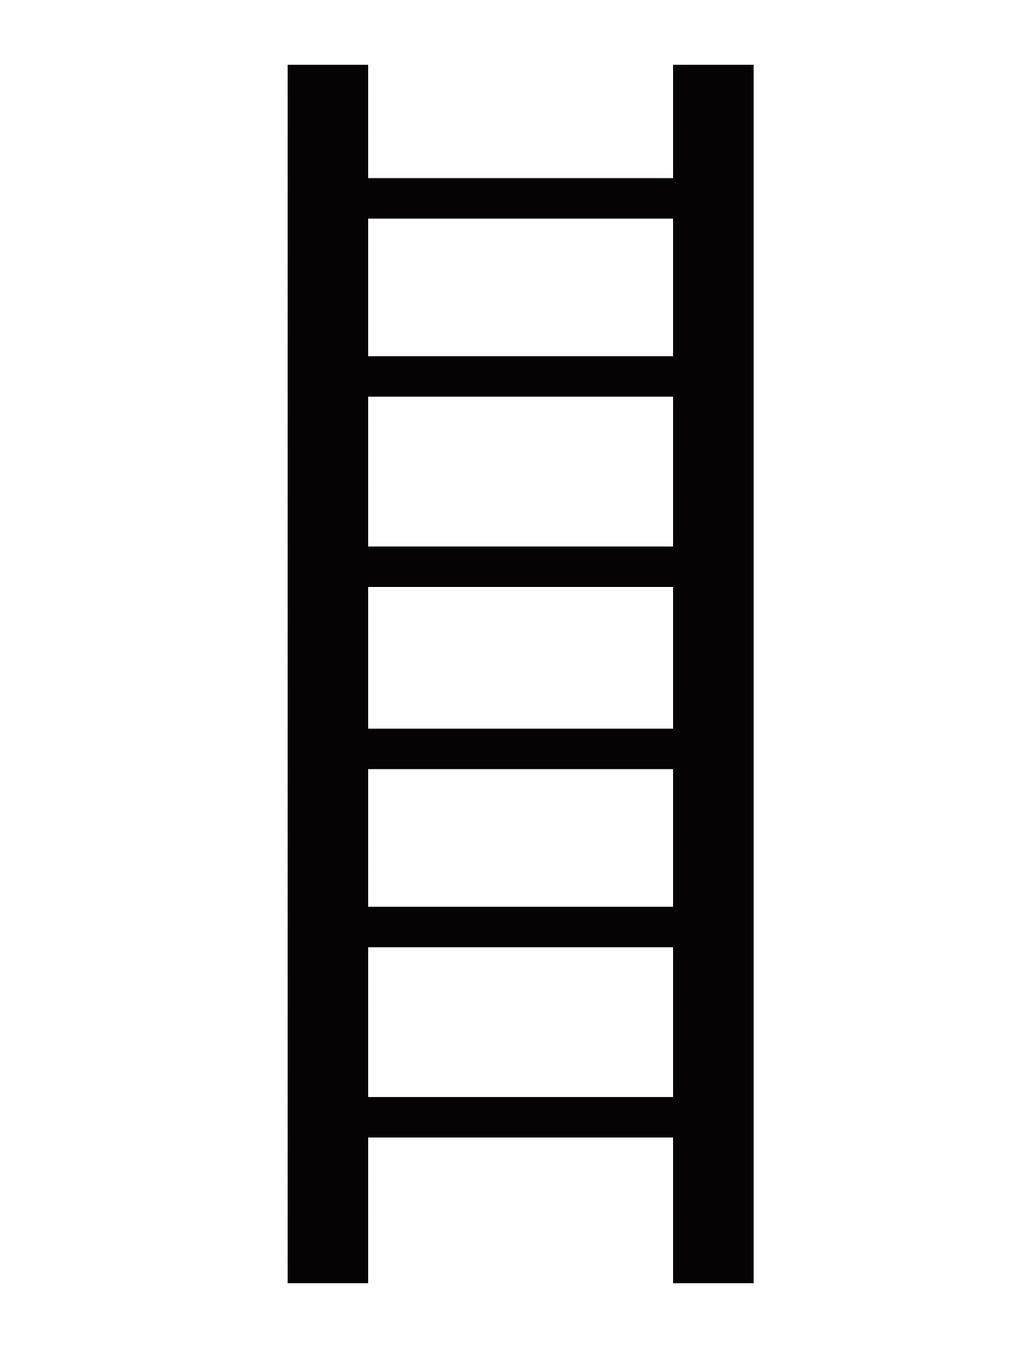 Retelling Ladder lesson learned solution problem